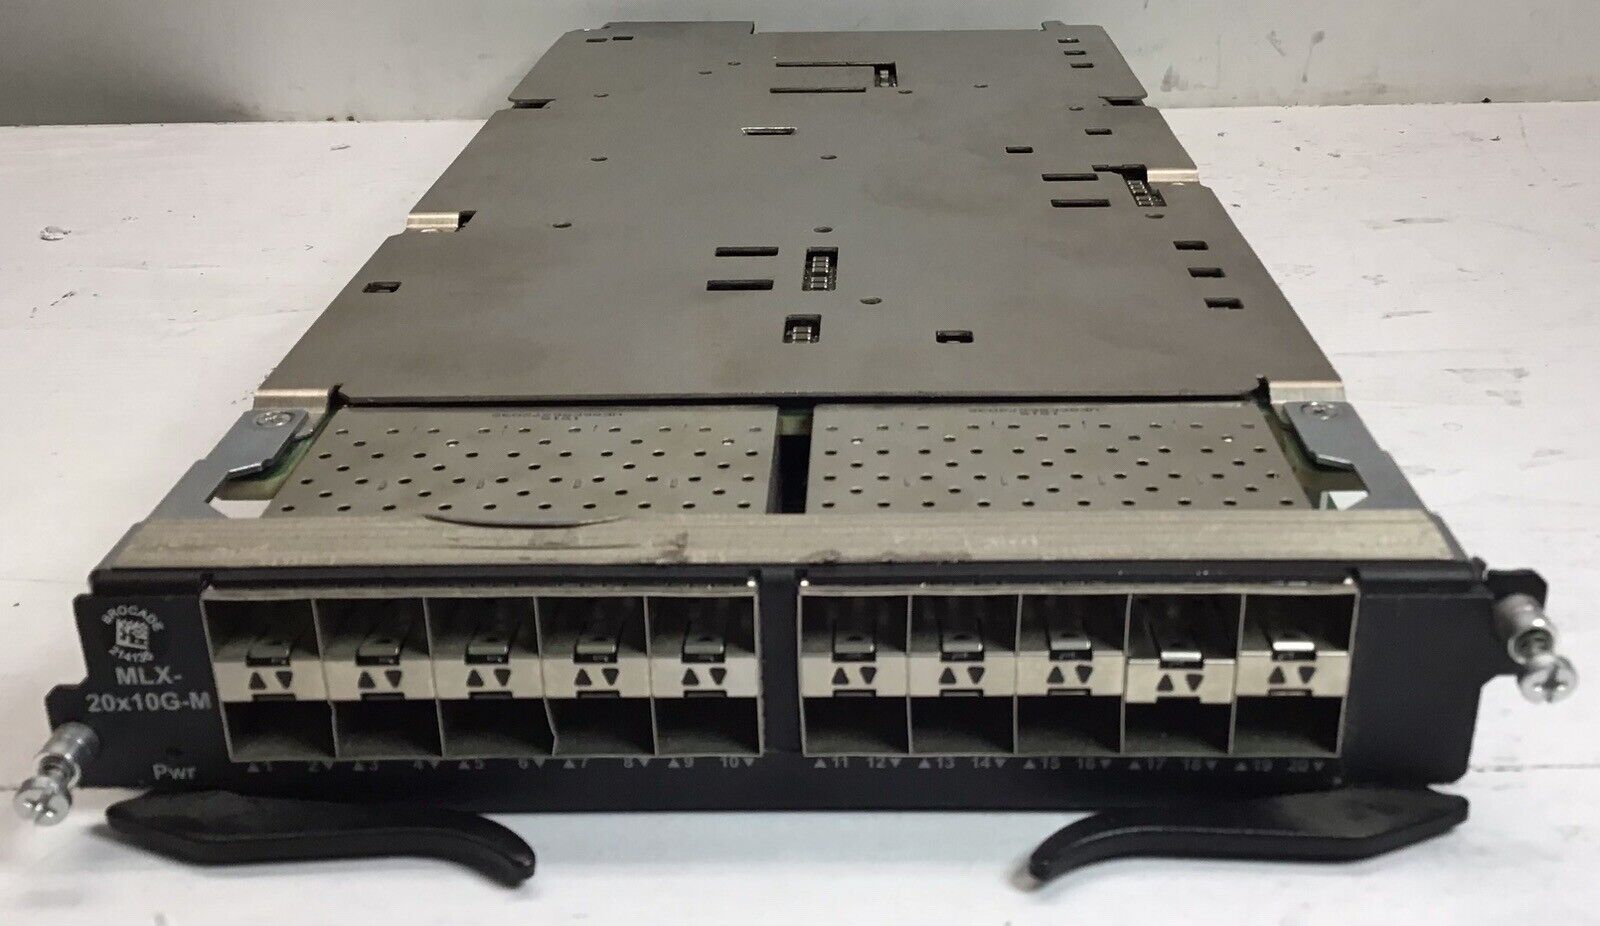 Brocade MLX-20x10G-M | 20x10g 20 Port 10gbe SFP Network Module